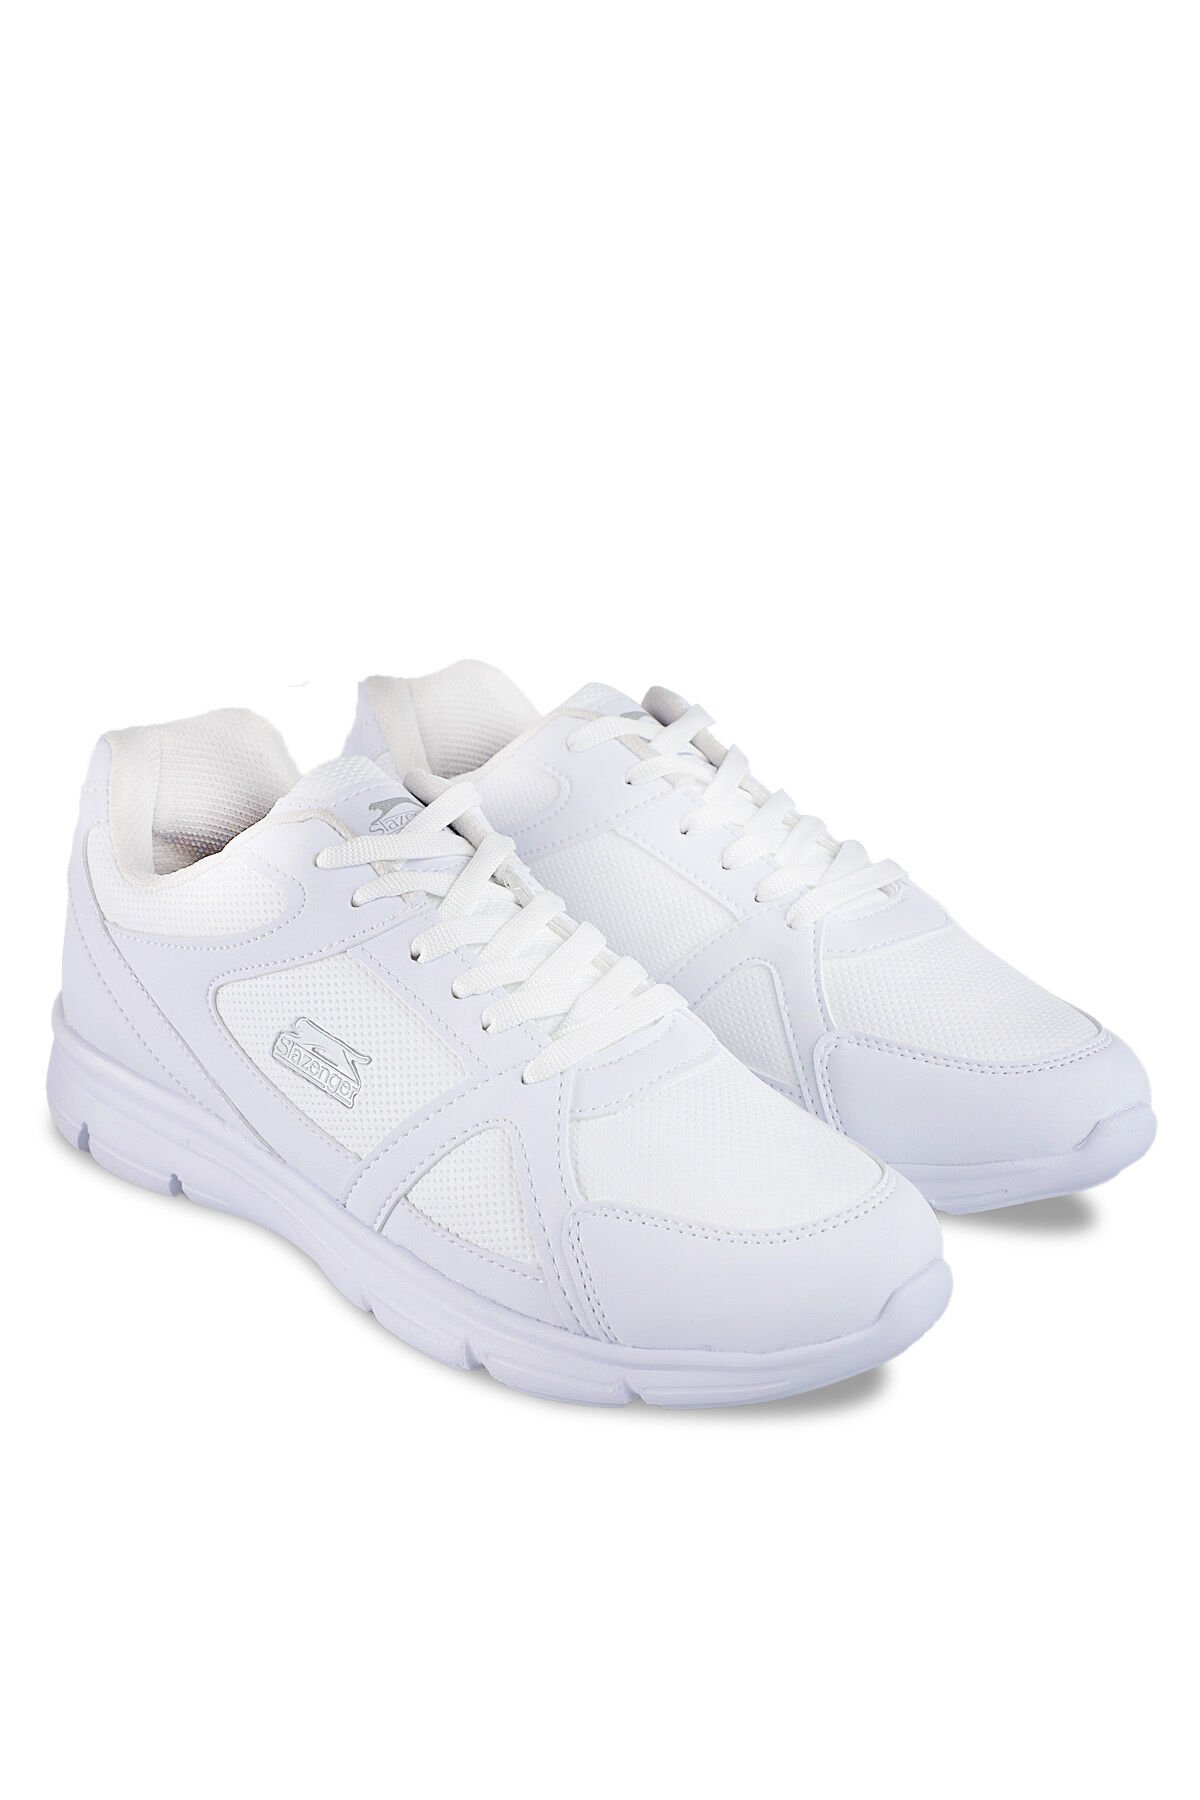 Slazenger PERA Sneaker Erkek Ayakkabı Beyaz - Thumbnail